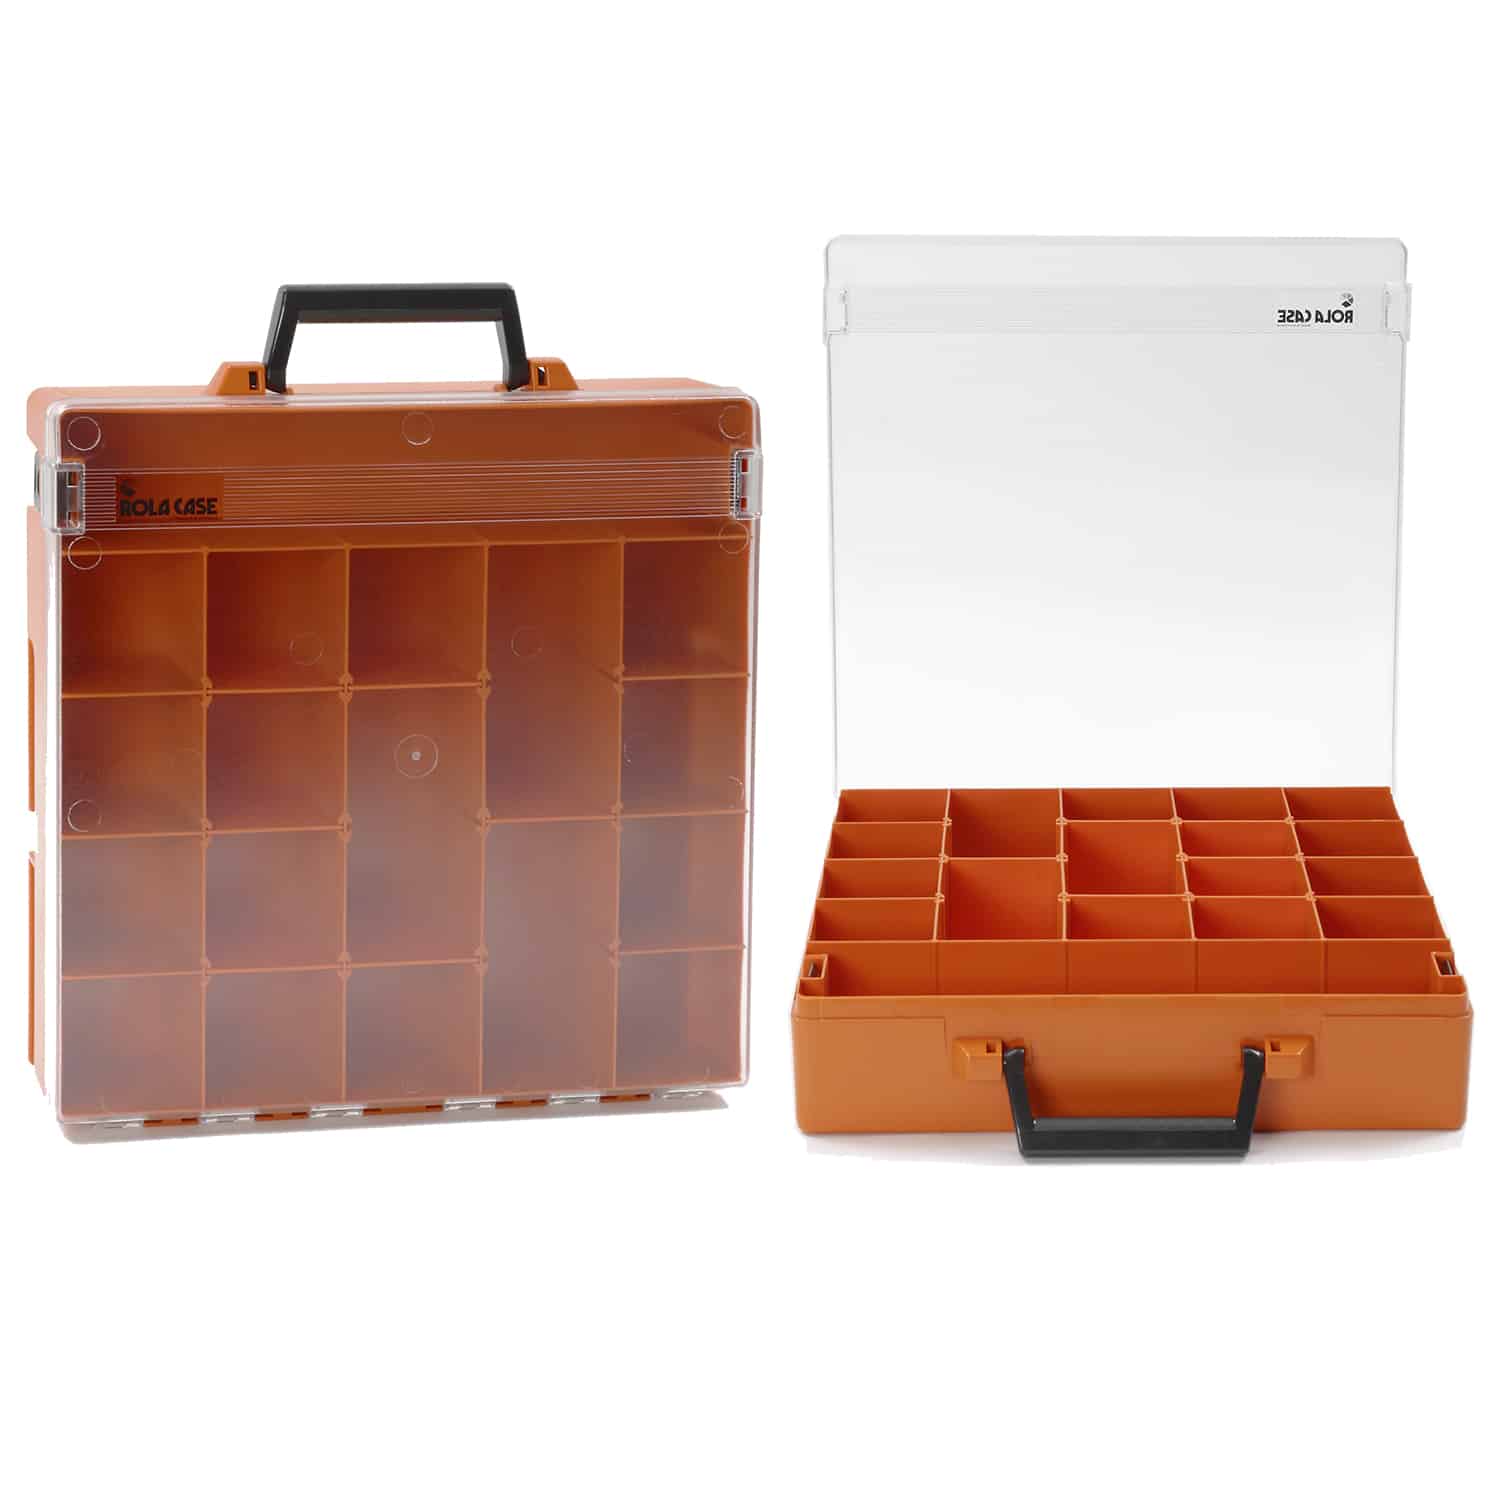 RCSK2/C Parts Organizer Cabinet Kit